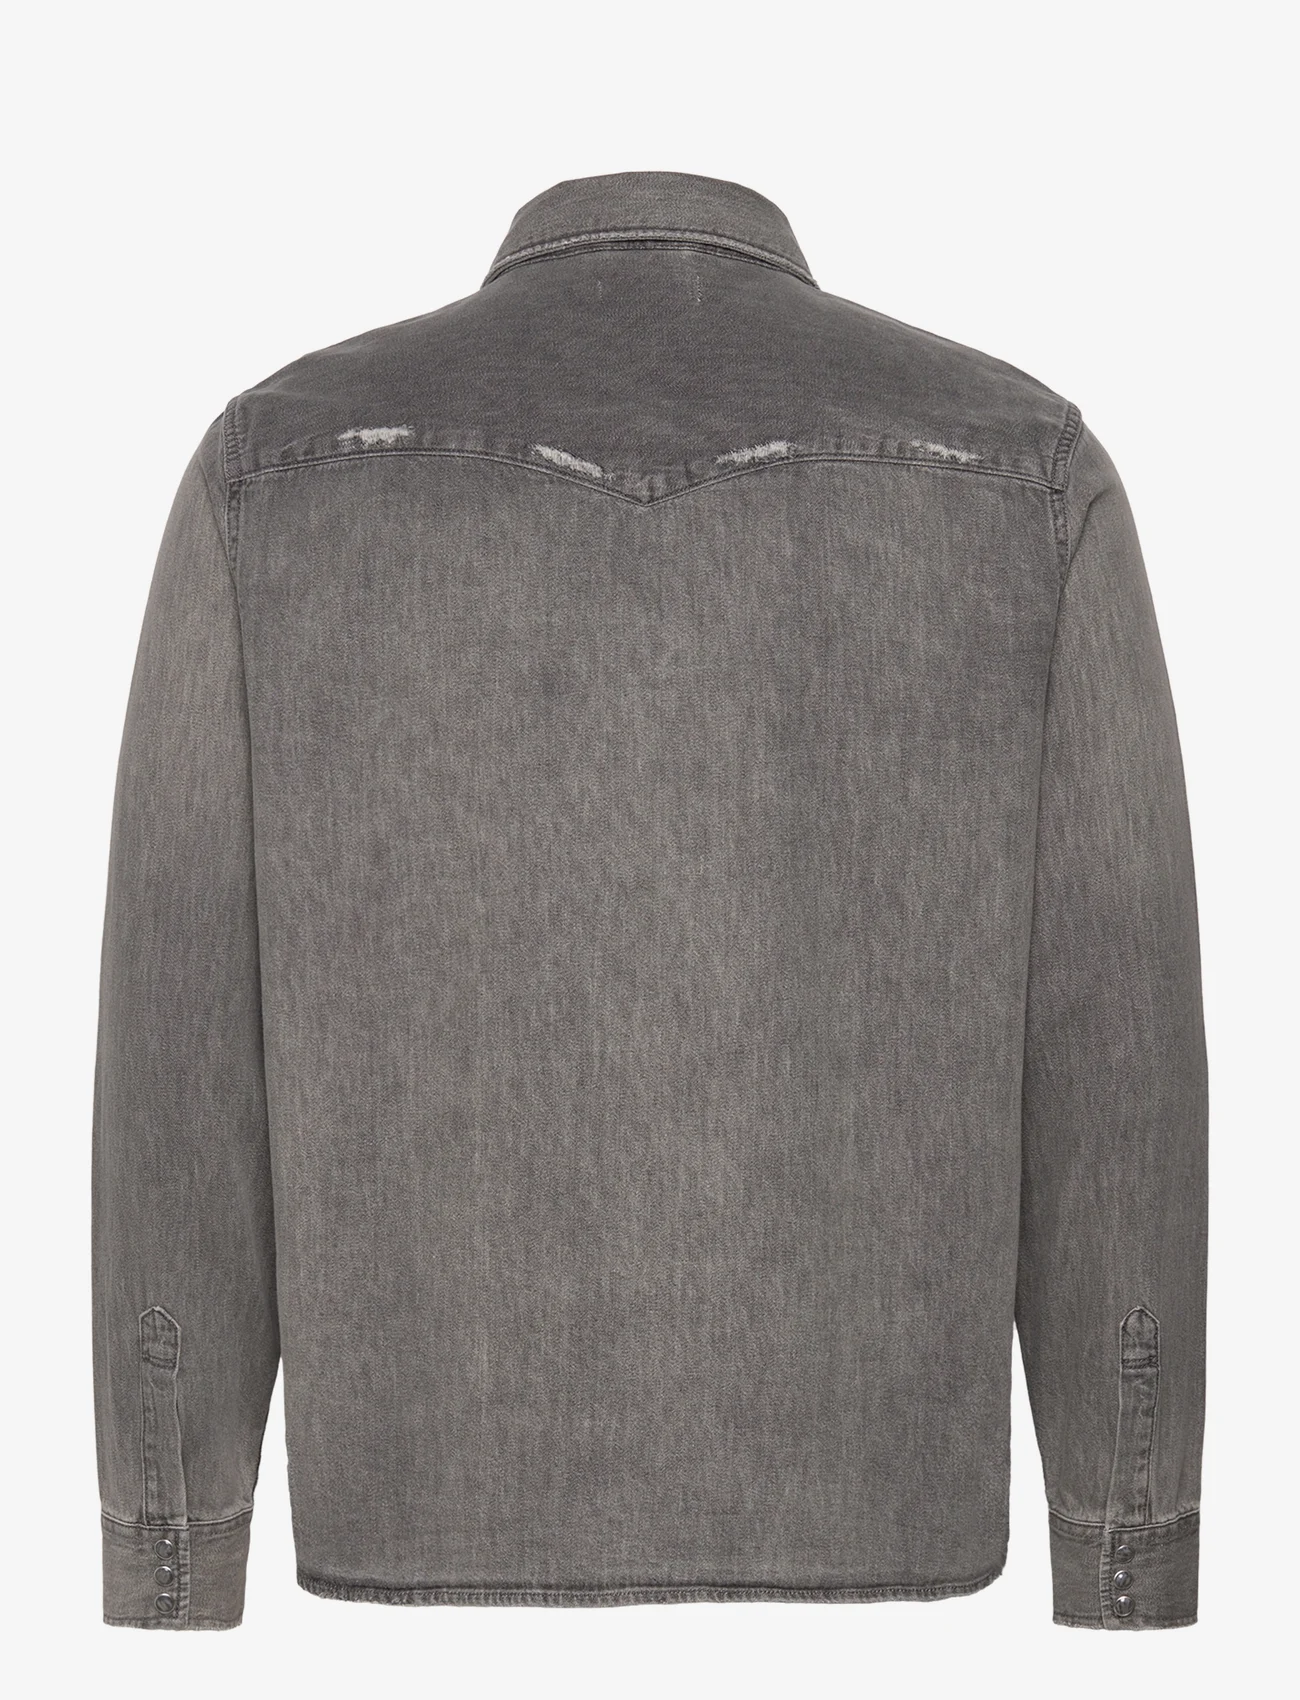 AllSaints - ORBIT SHIRT - podstawowe koszulki - washed grey - 1